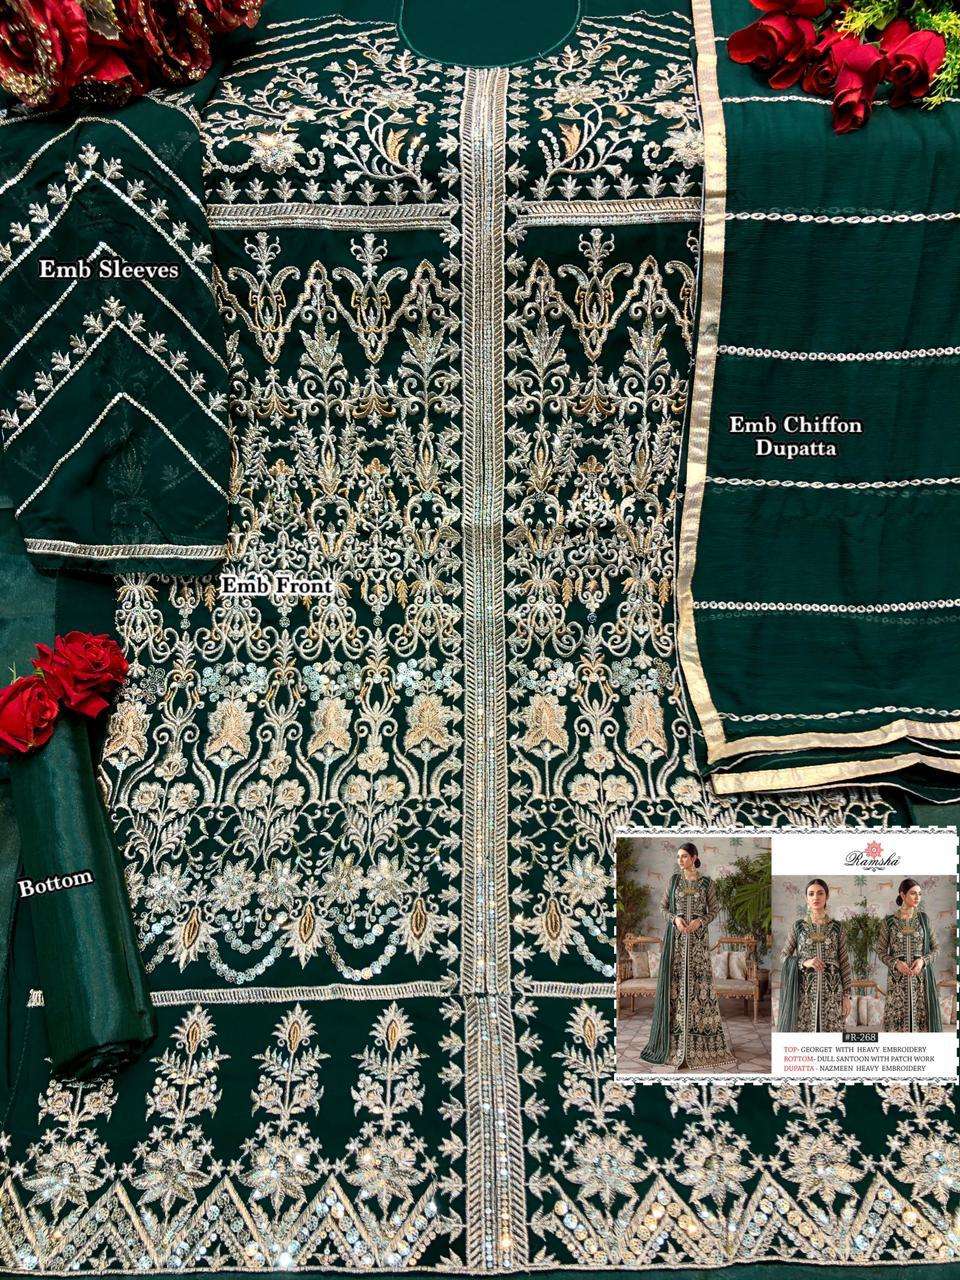 Ramsha Vol 1 R265 To R268 Series Designer Pakistani Suit Catalog